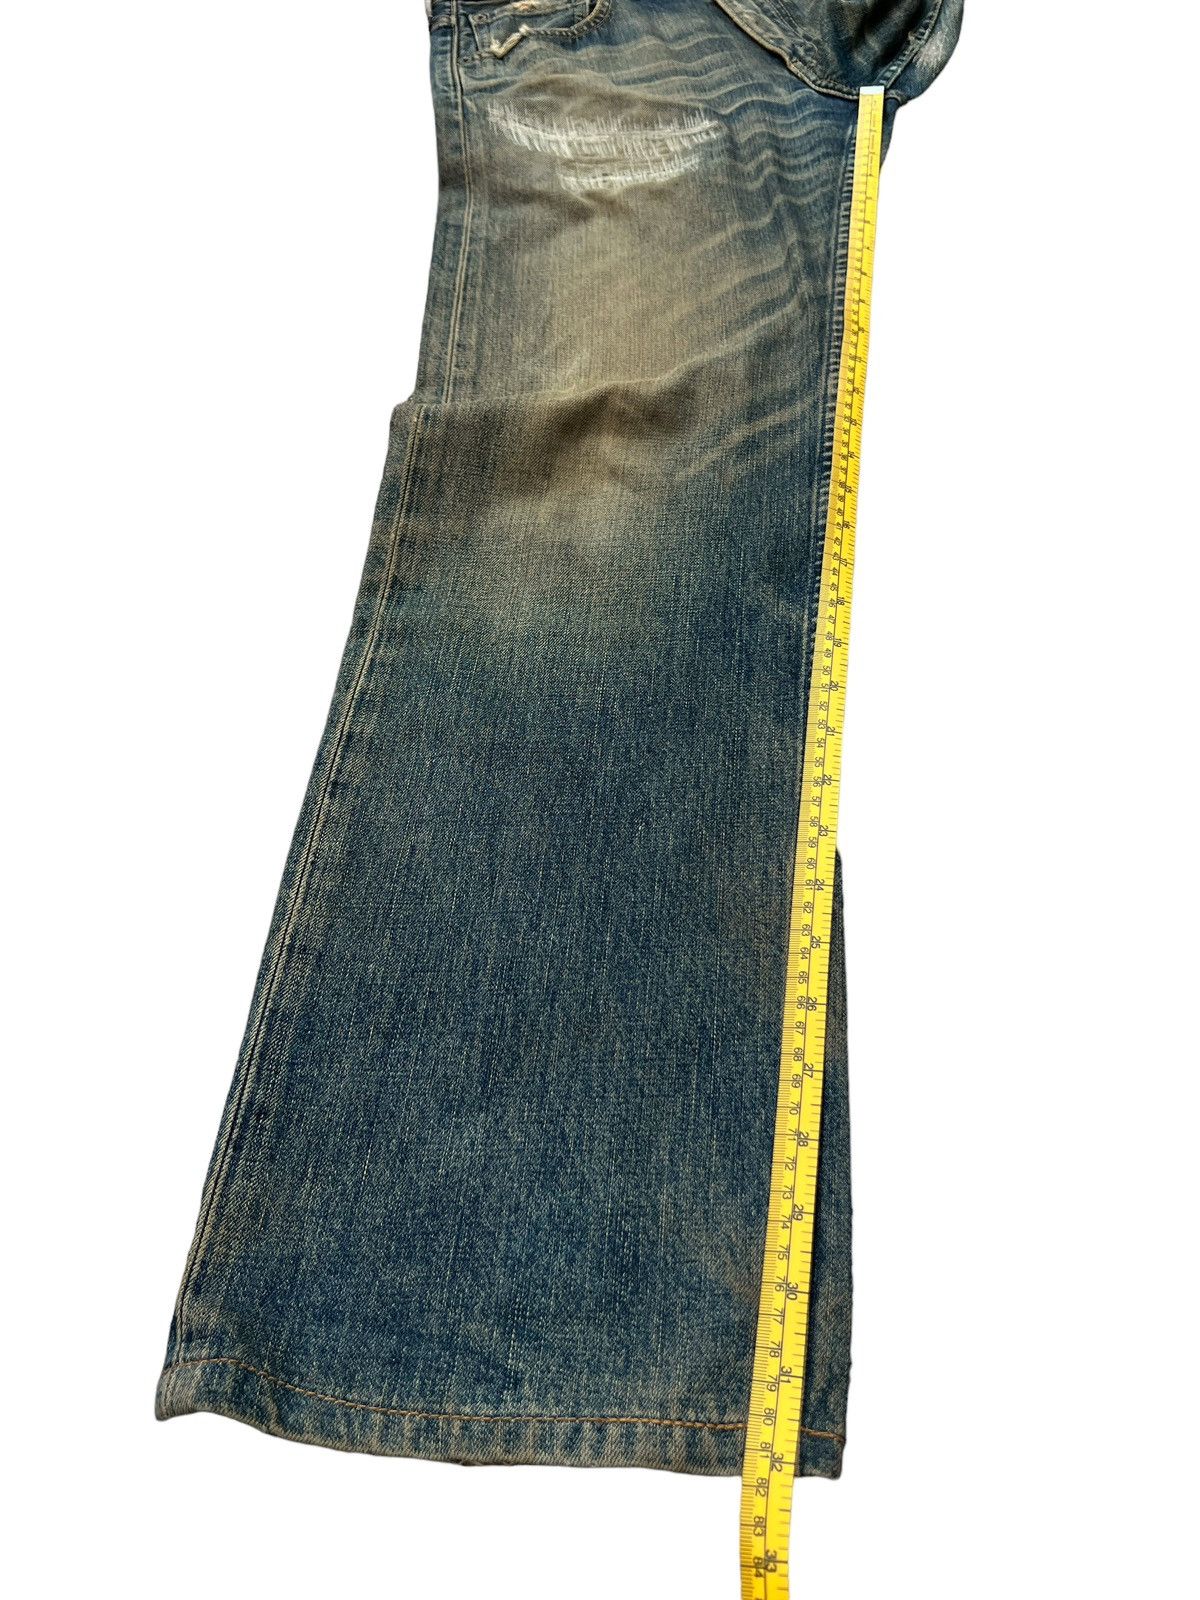 Vintage Levi’s 503 Distressed Rusty Denim Jeans 30x32 - 18